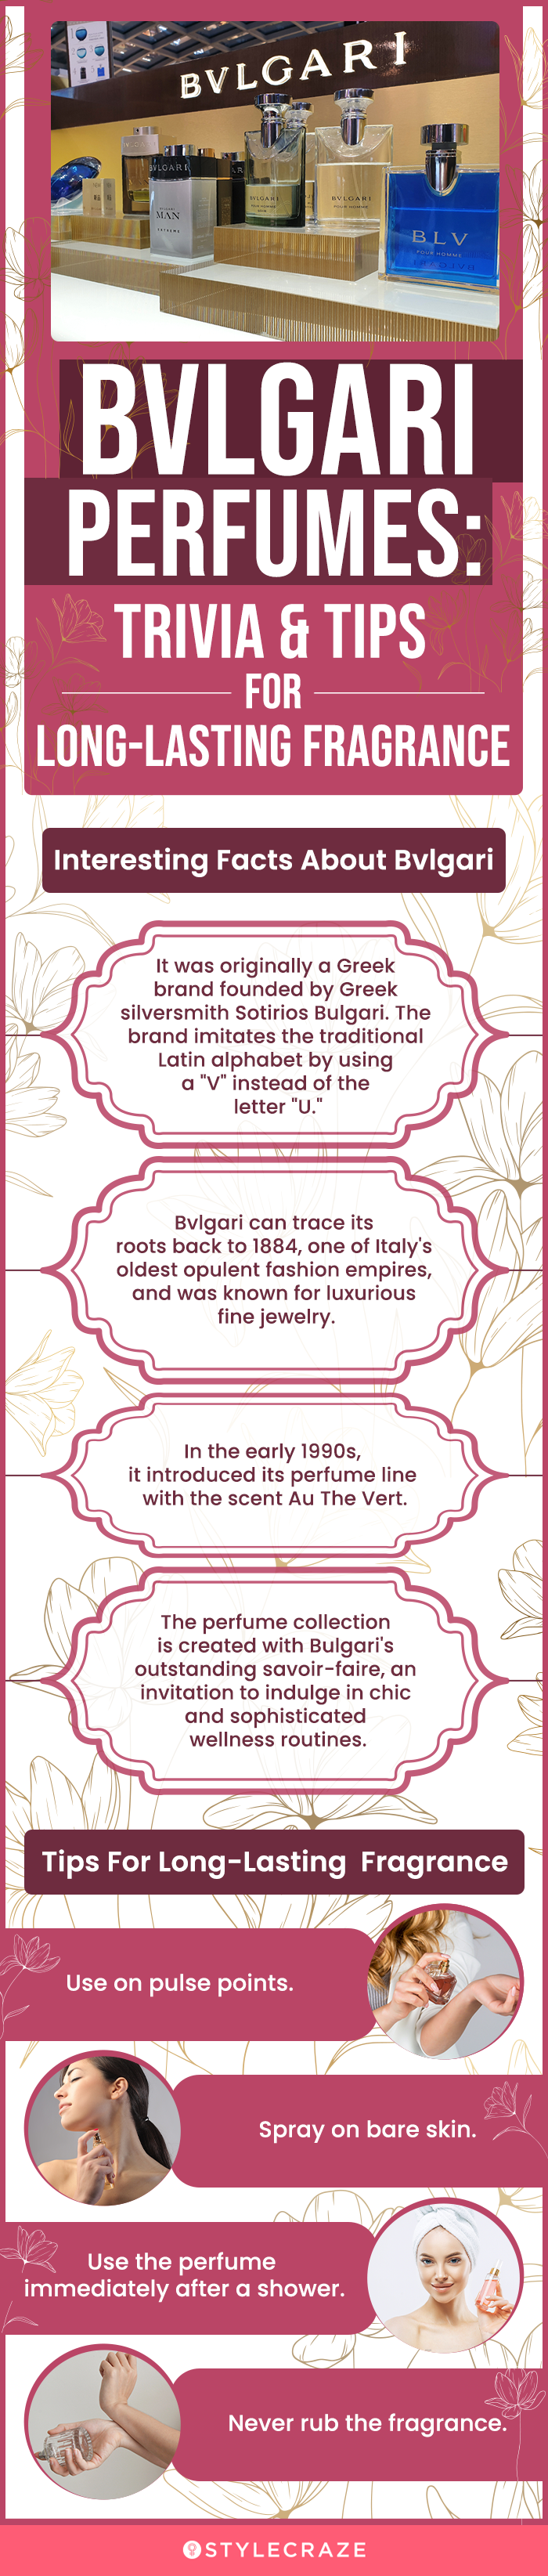 Bvlgari Perfumes- Trivia & Tips For Long-Lasting Fragrance